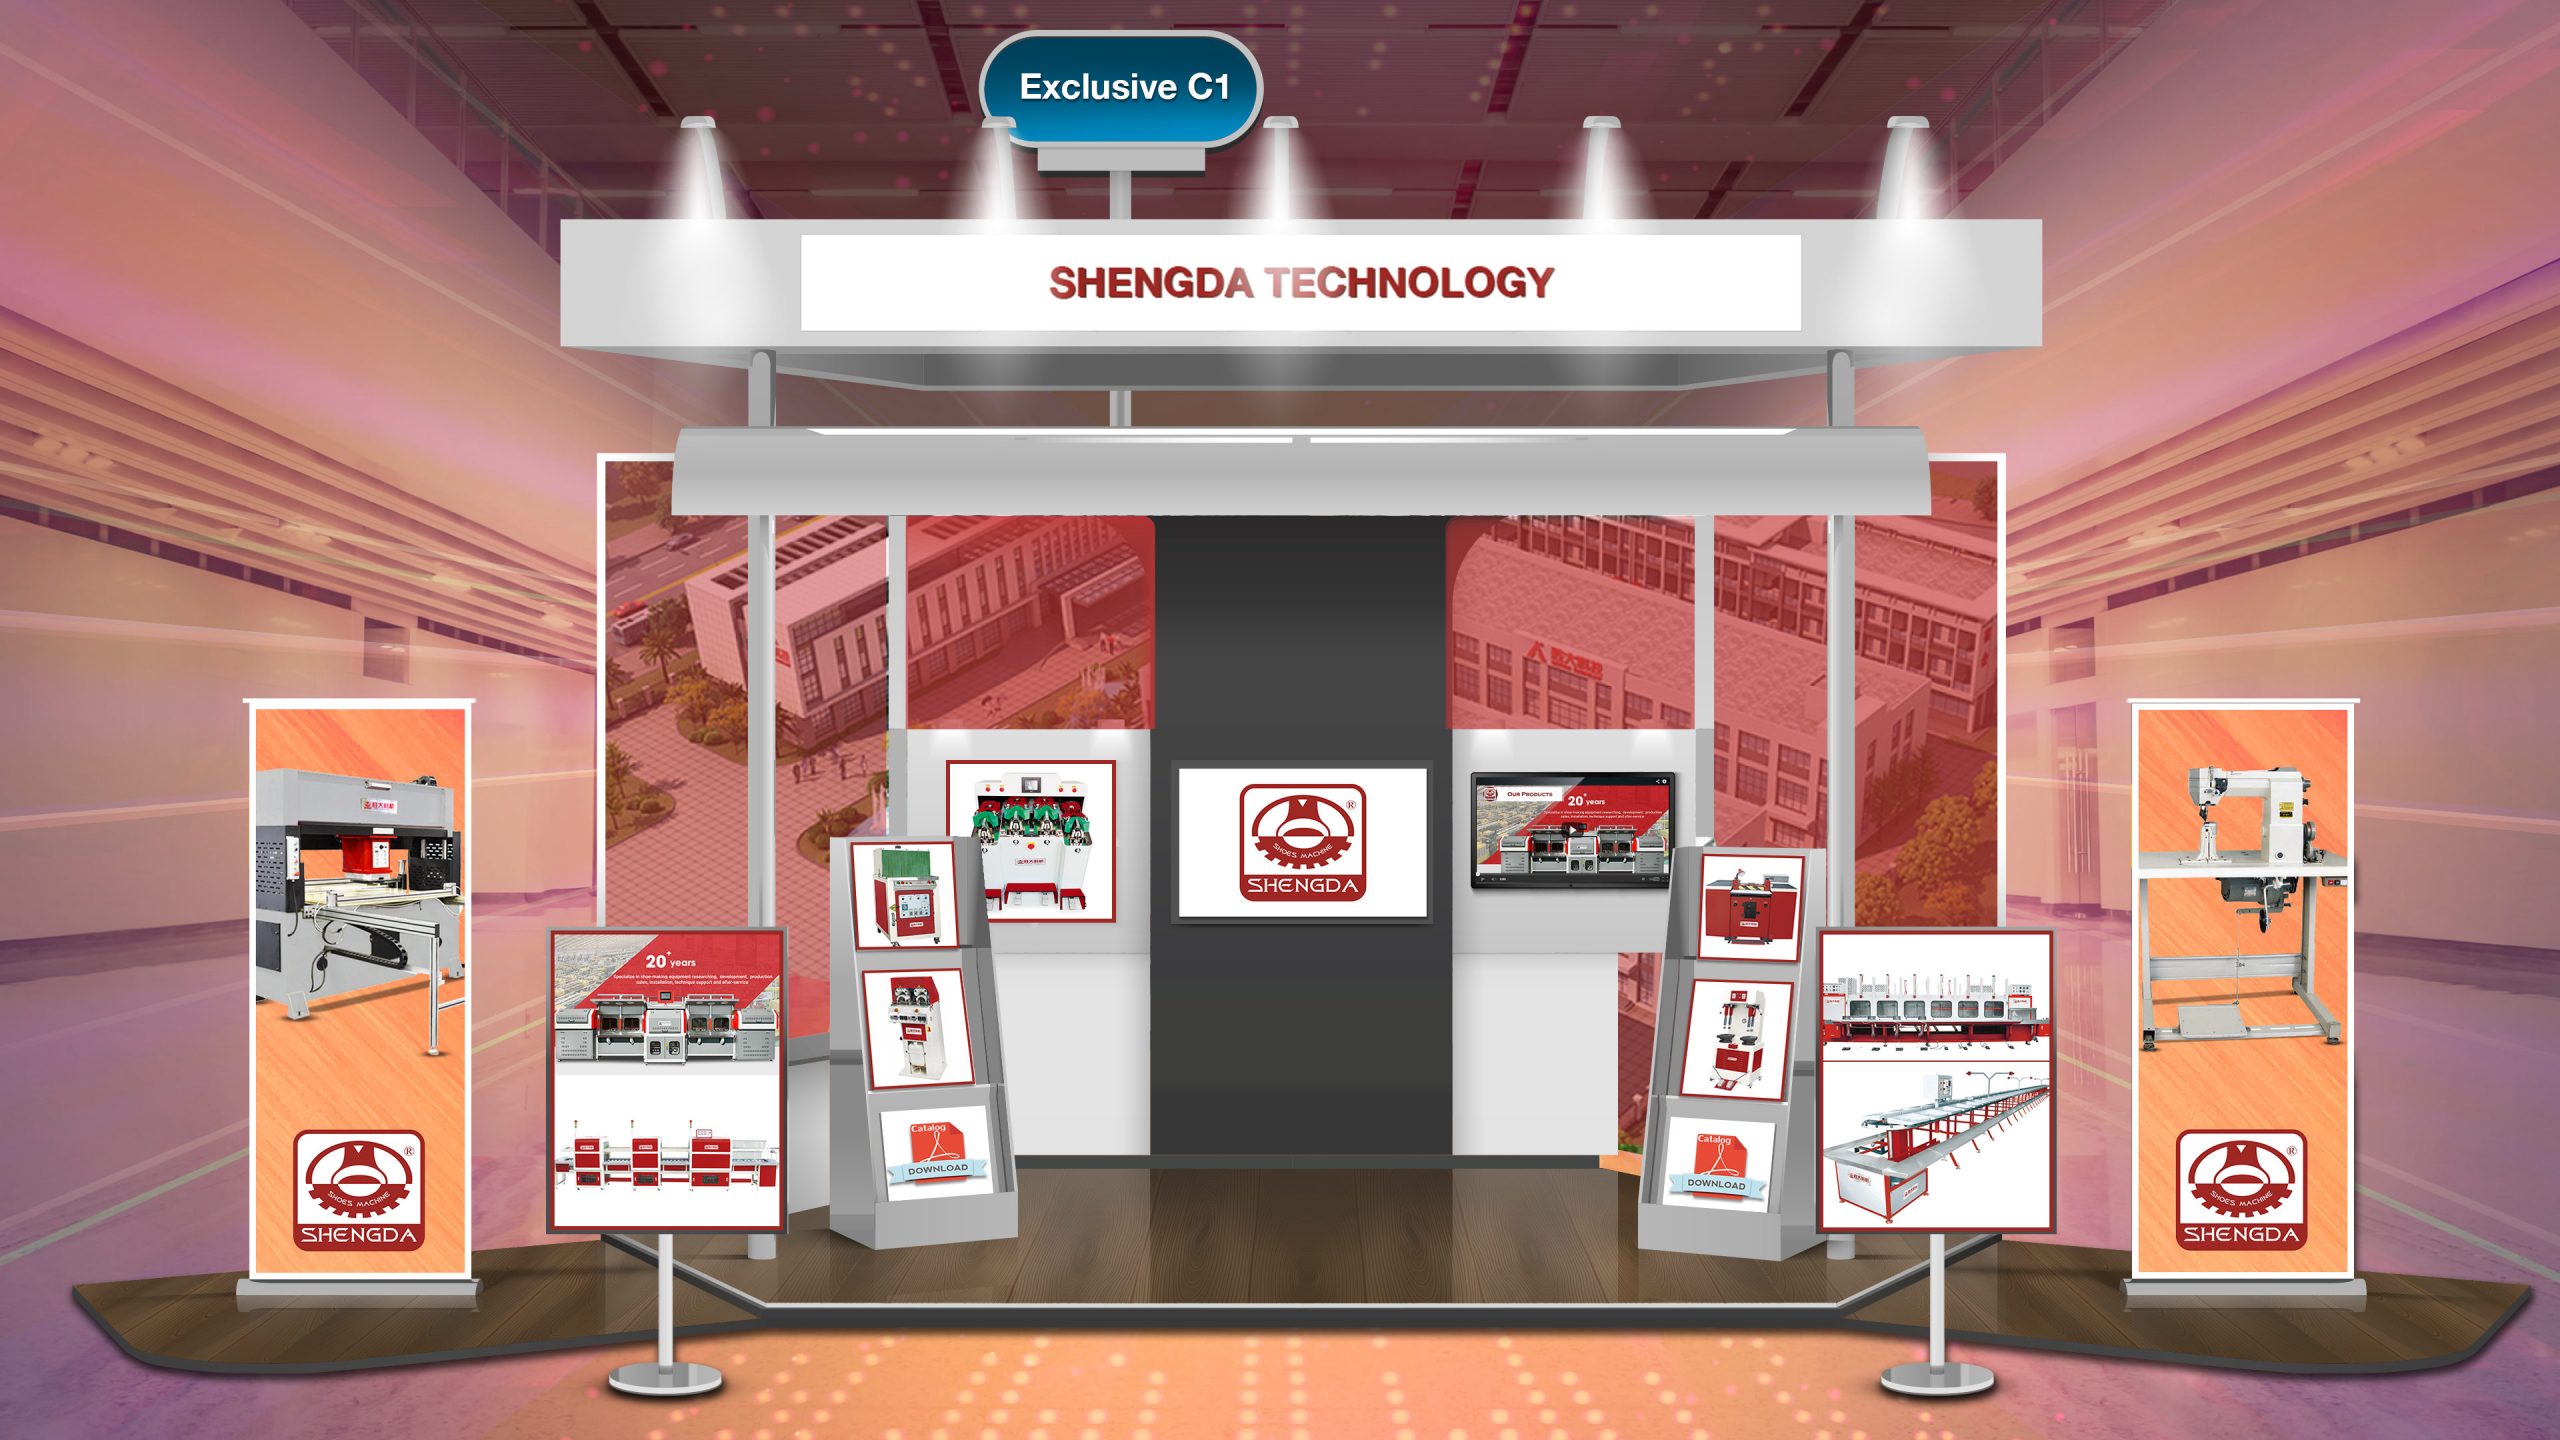 Shengda Technology